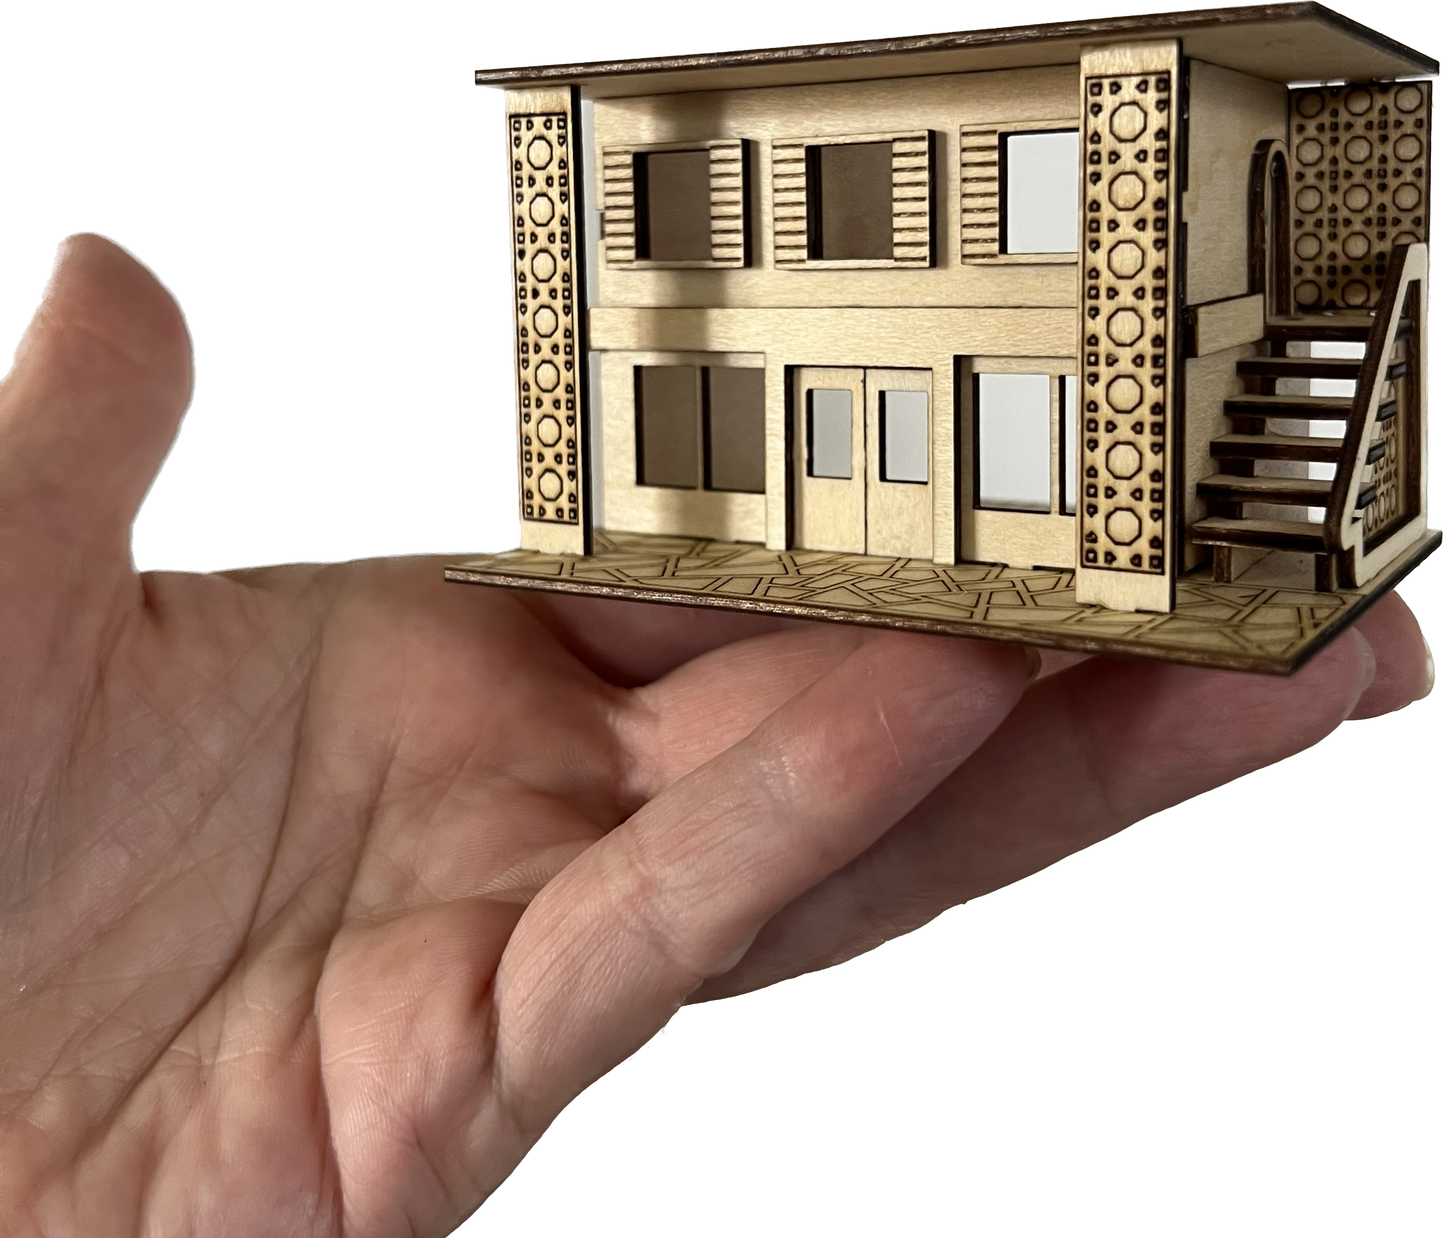 The Margo, Mid Century Modern Miniature Dollhouse 1:144